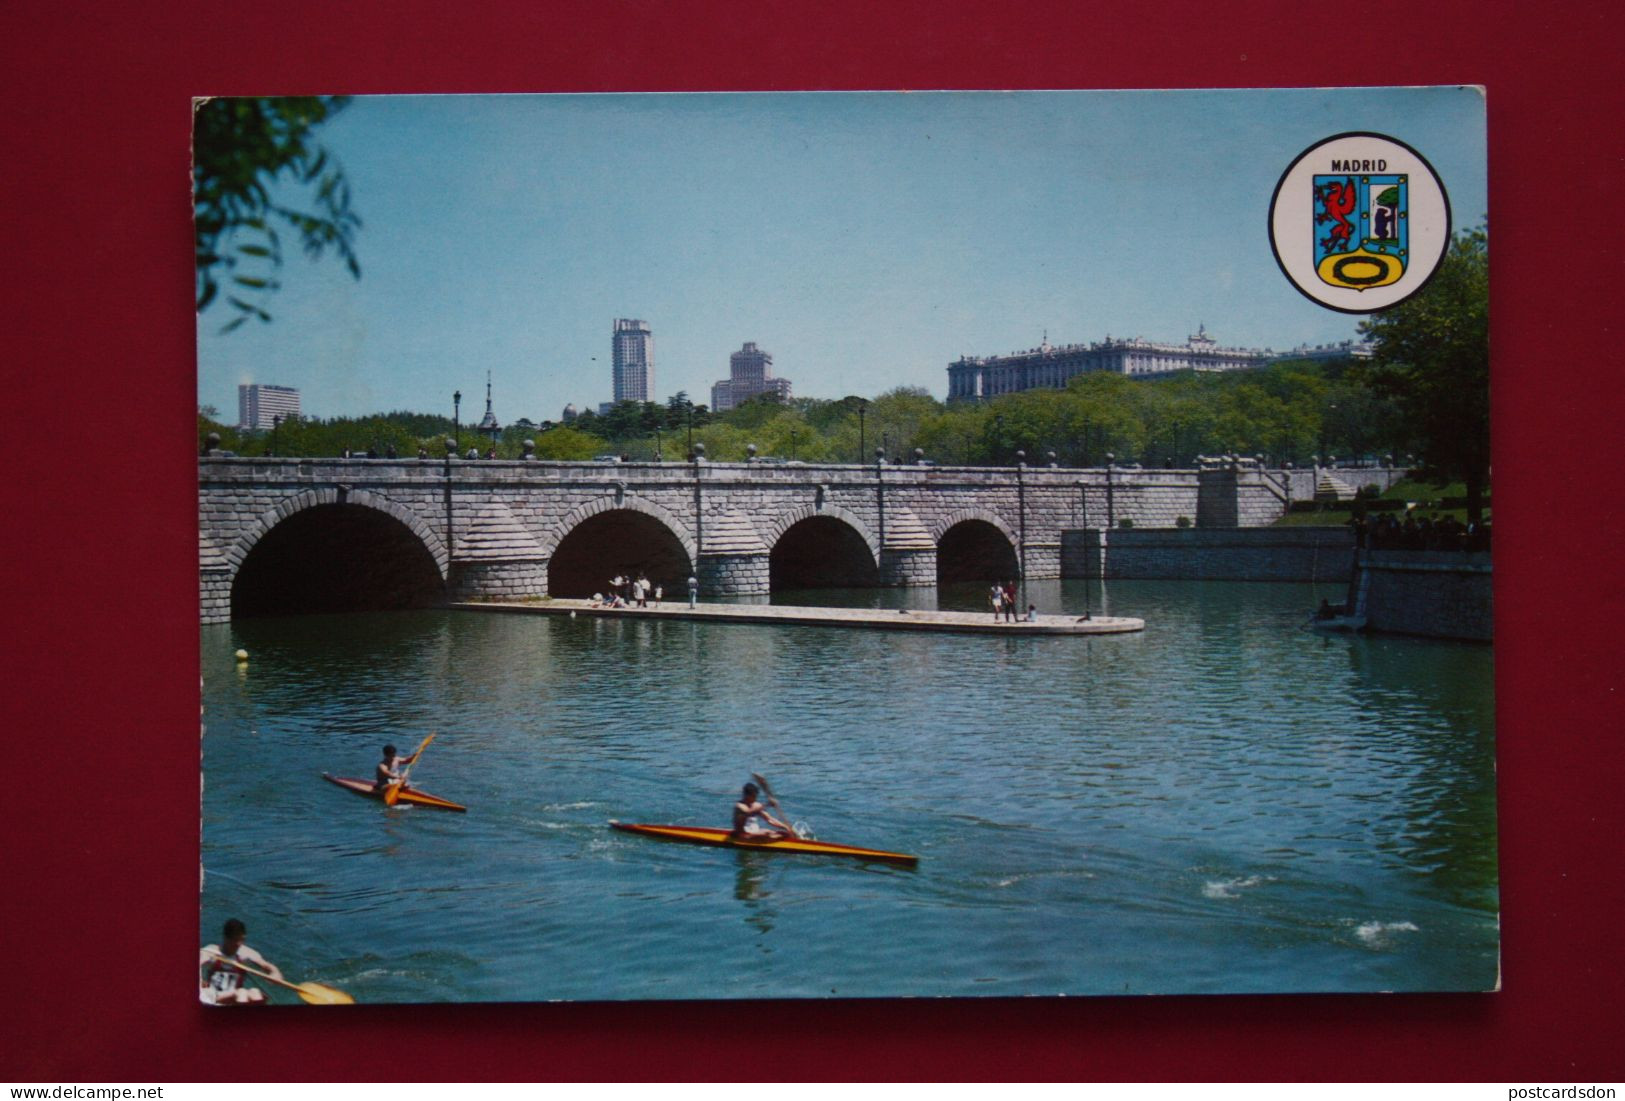 Postcard Madrid -   Segovia Bridge- Rowing -  1970s  KAYAK - Roeisport